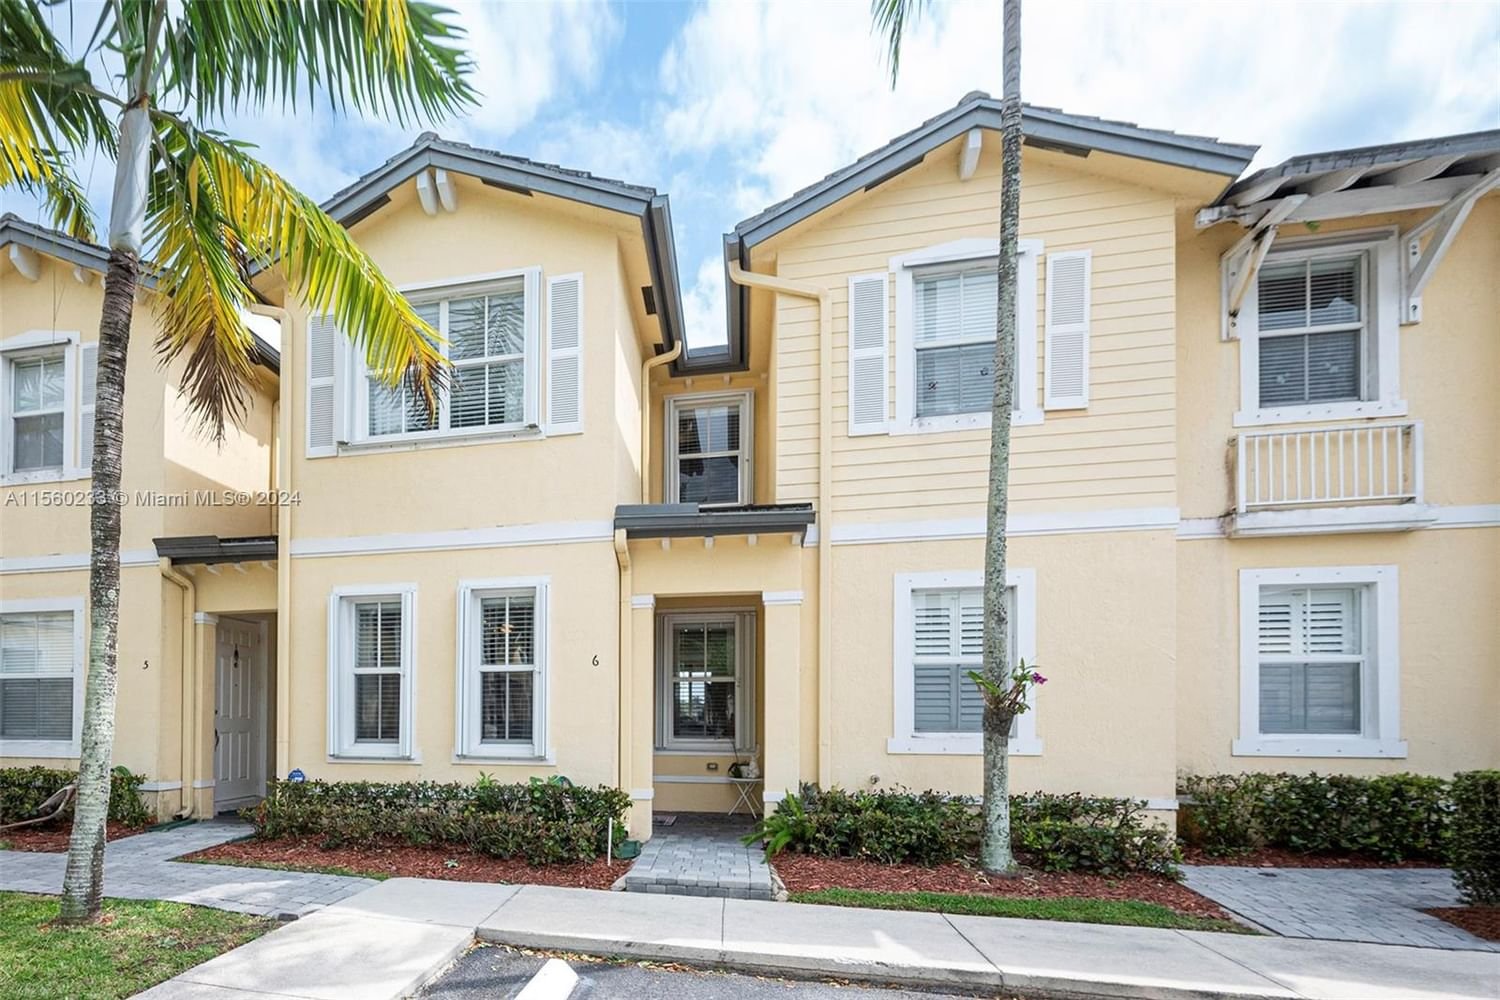 Real estate property located at 3064 1st Dr #6, Miami-Dade County, FIJI CONDO NO 3, Homestead, FL